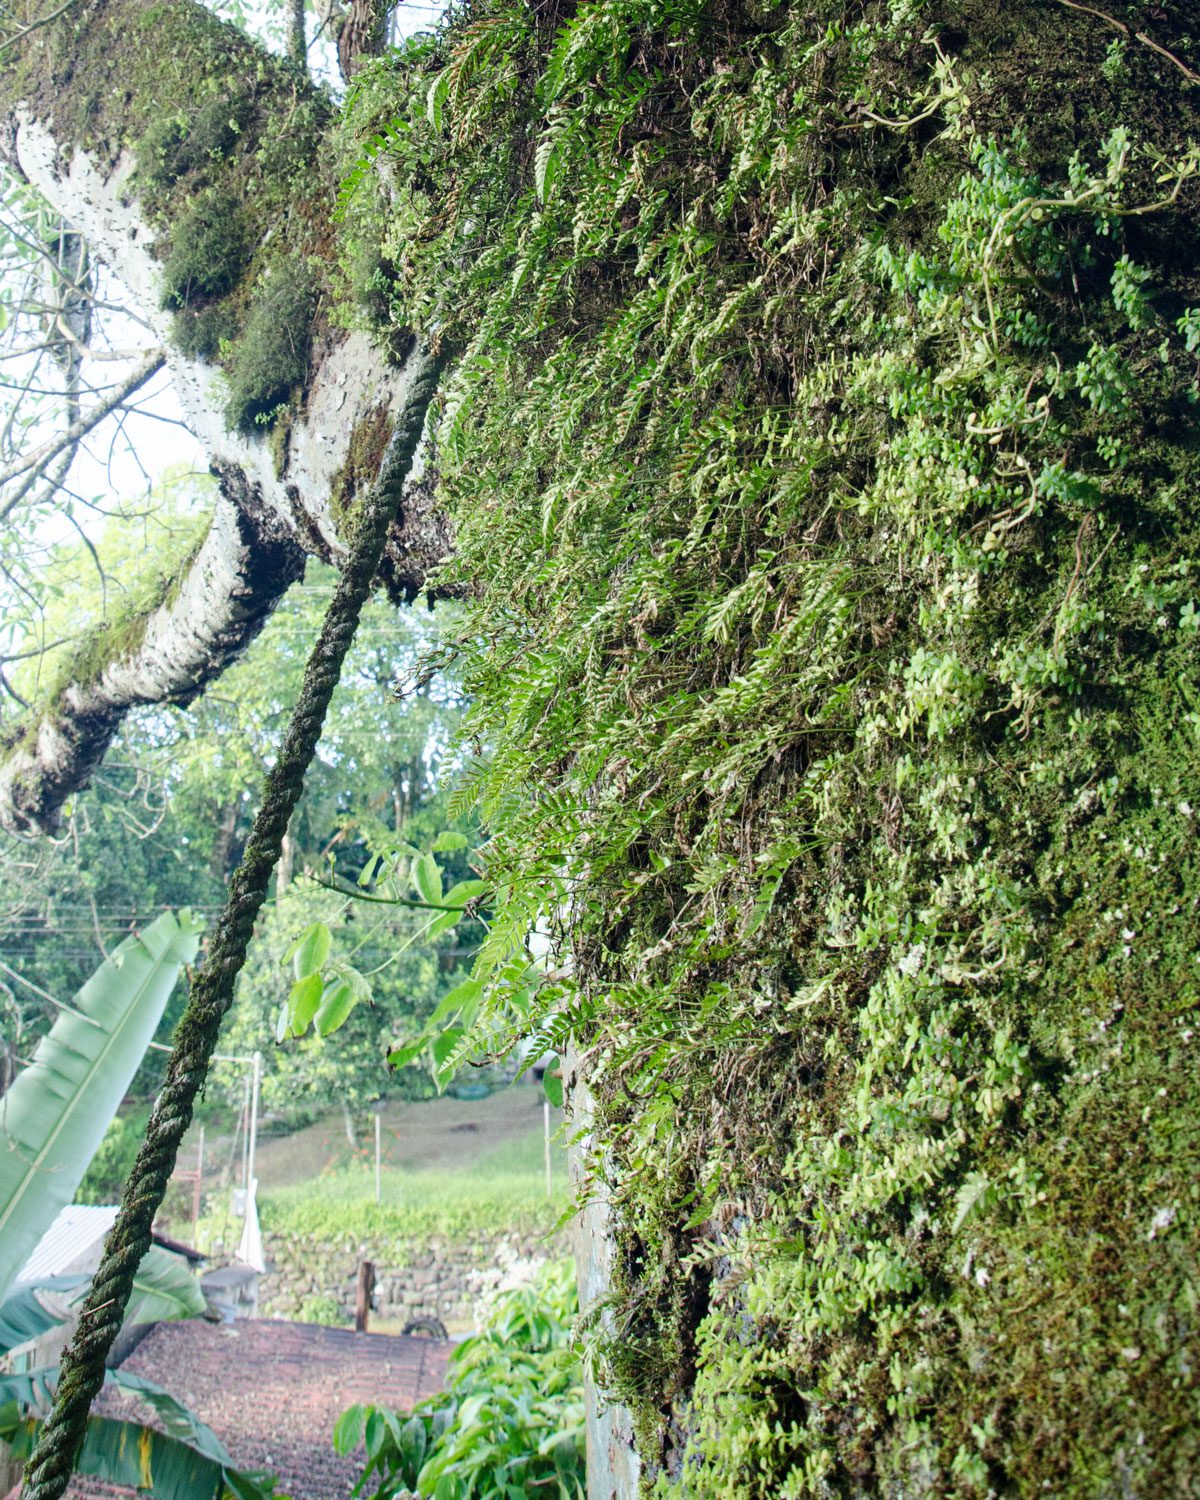 Fern and Moss on the Oldest Ceibo Tree, San Cristobal, Ecuador | ©Angela Drake